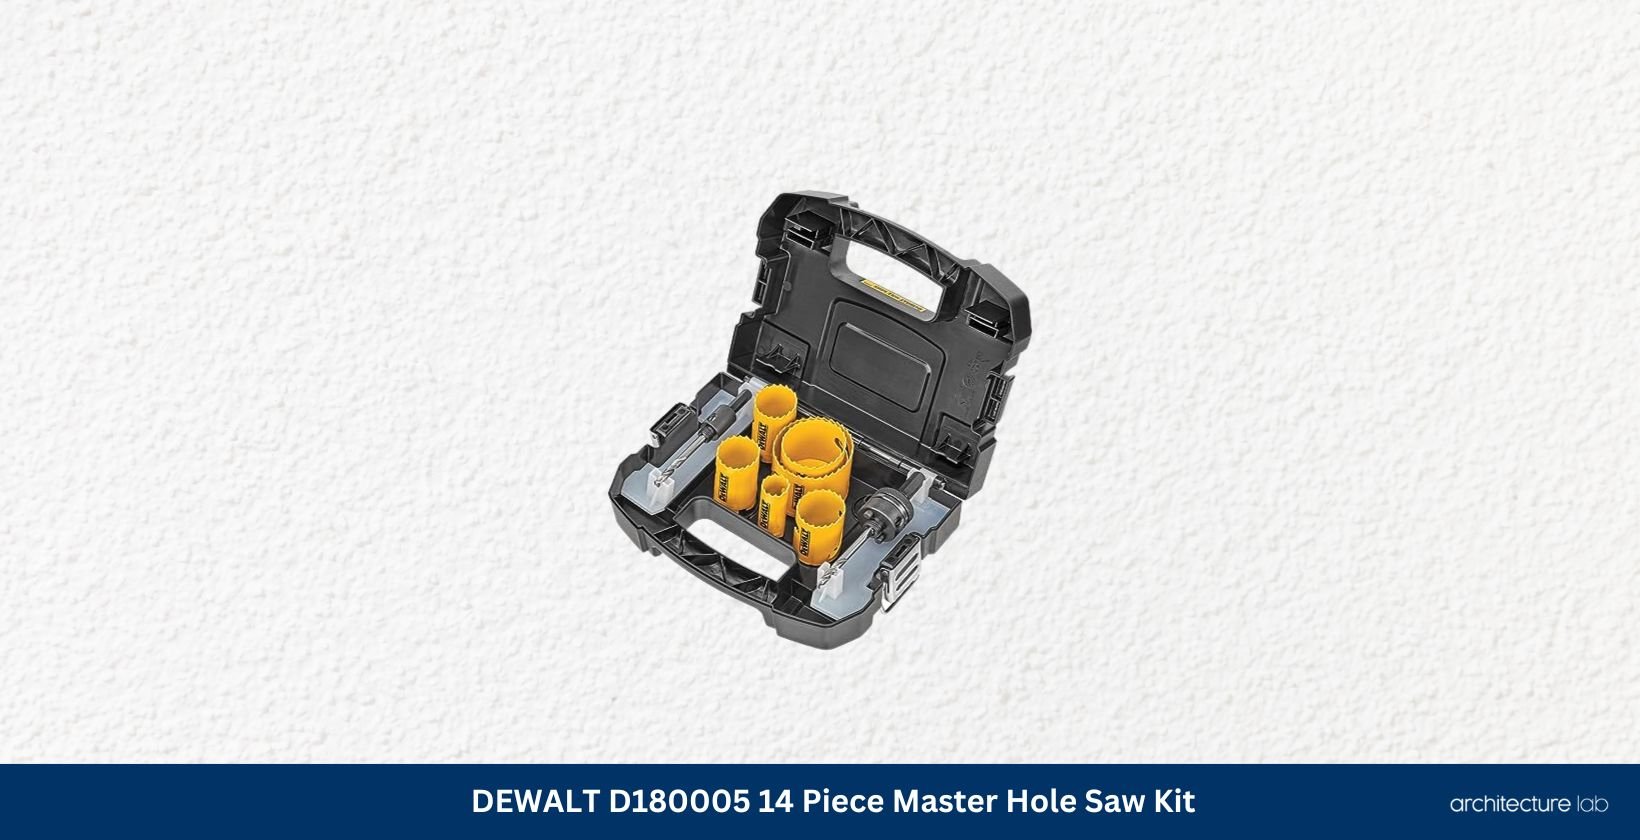 Dewalt d180005 14 piece master hole saw kit